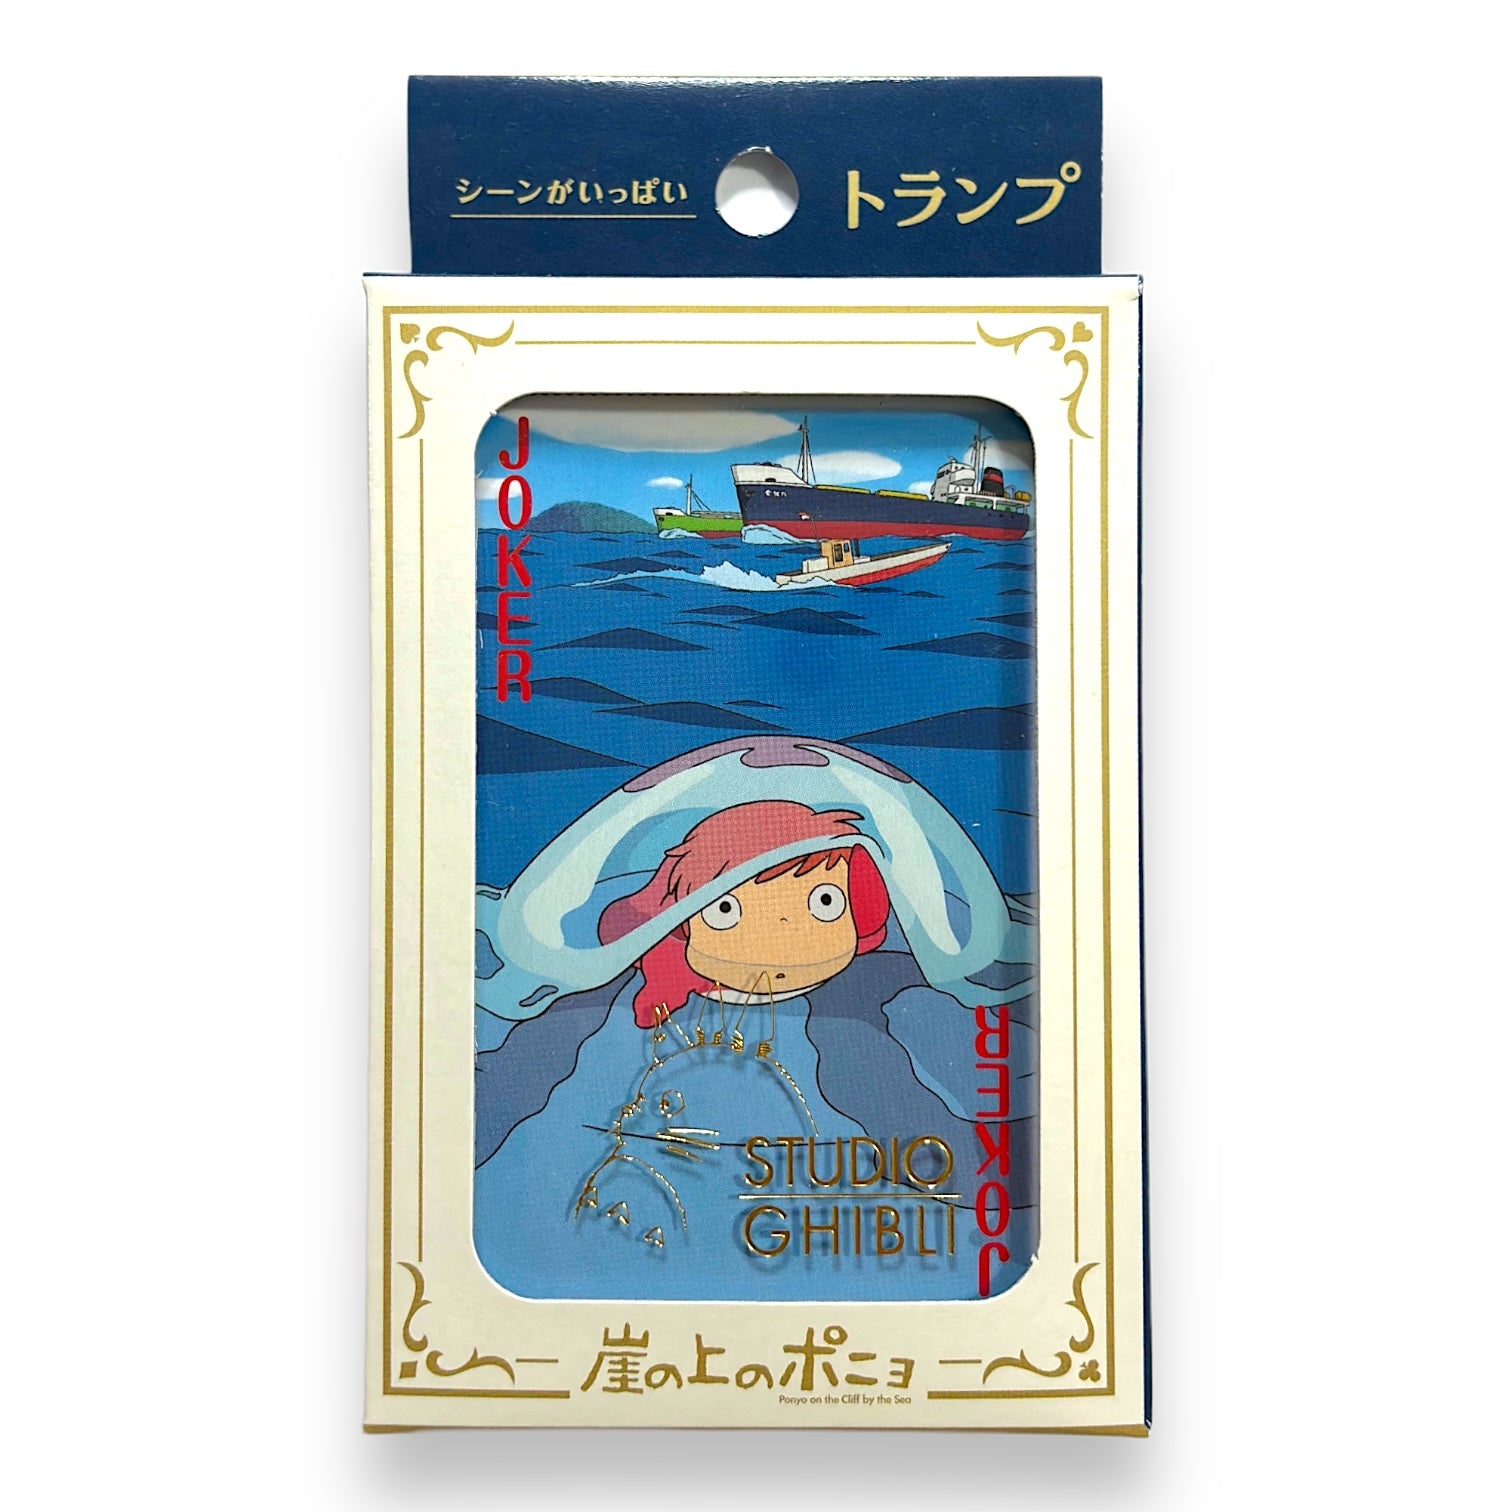 Studio Ghibli Playing Cards Collection - My Neighbor Totoro, Kiki&